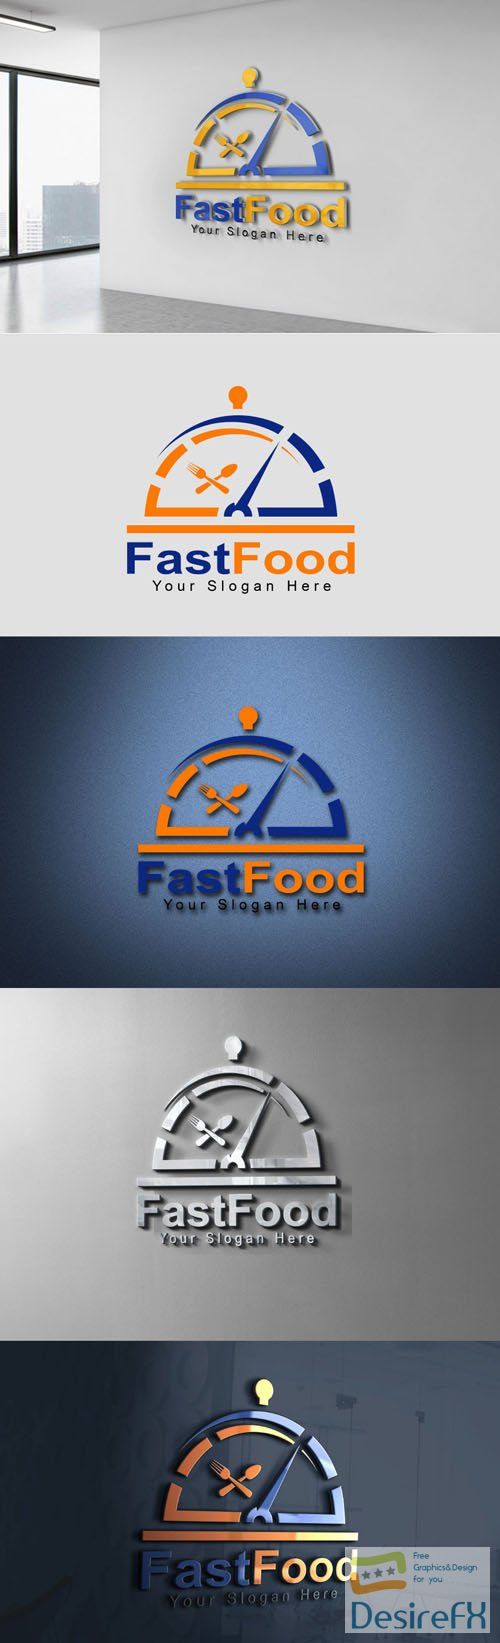 Fast Food Logo PSD Mockup Template